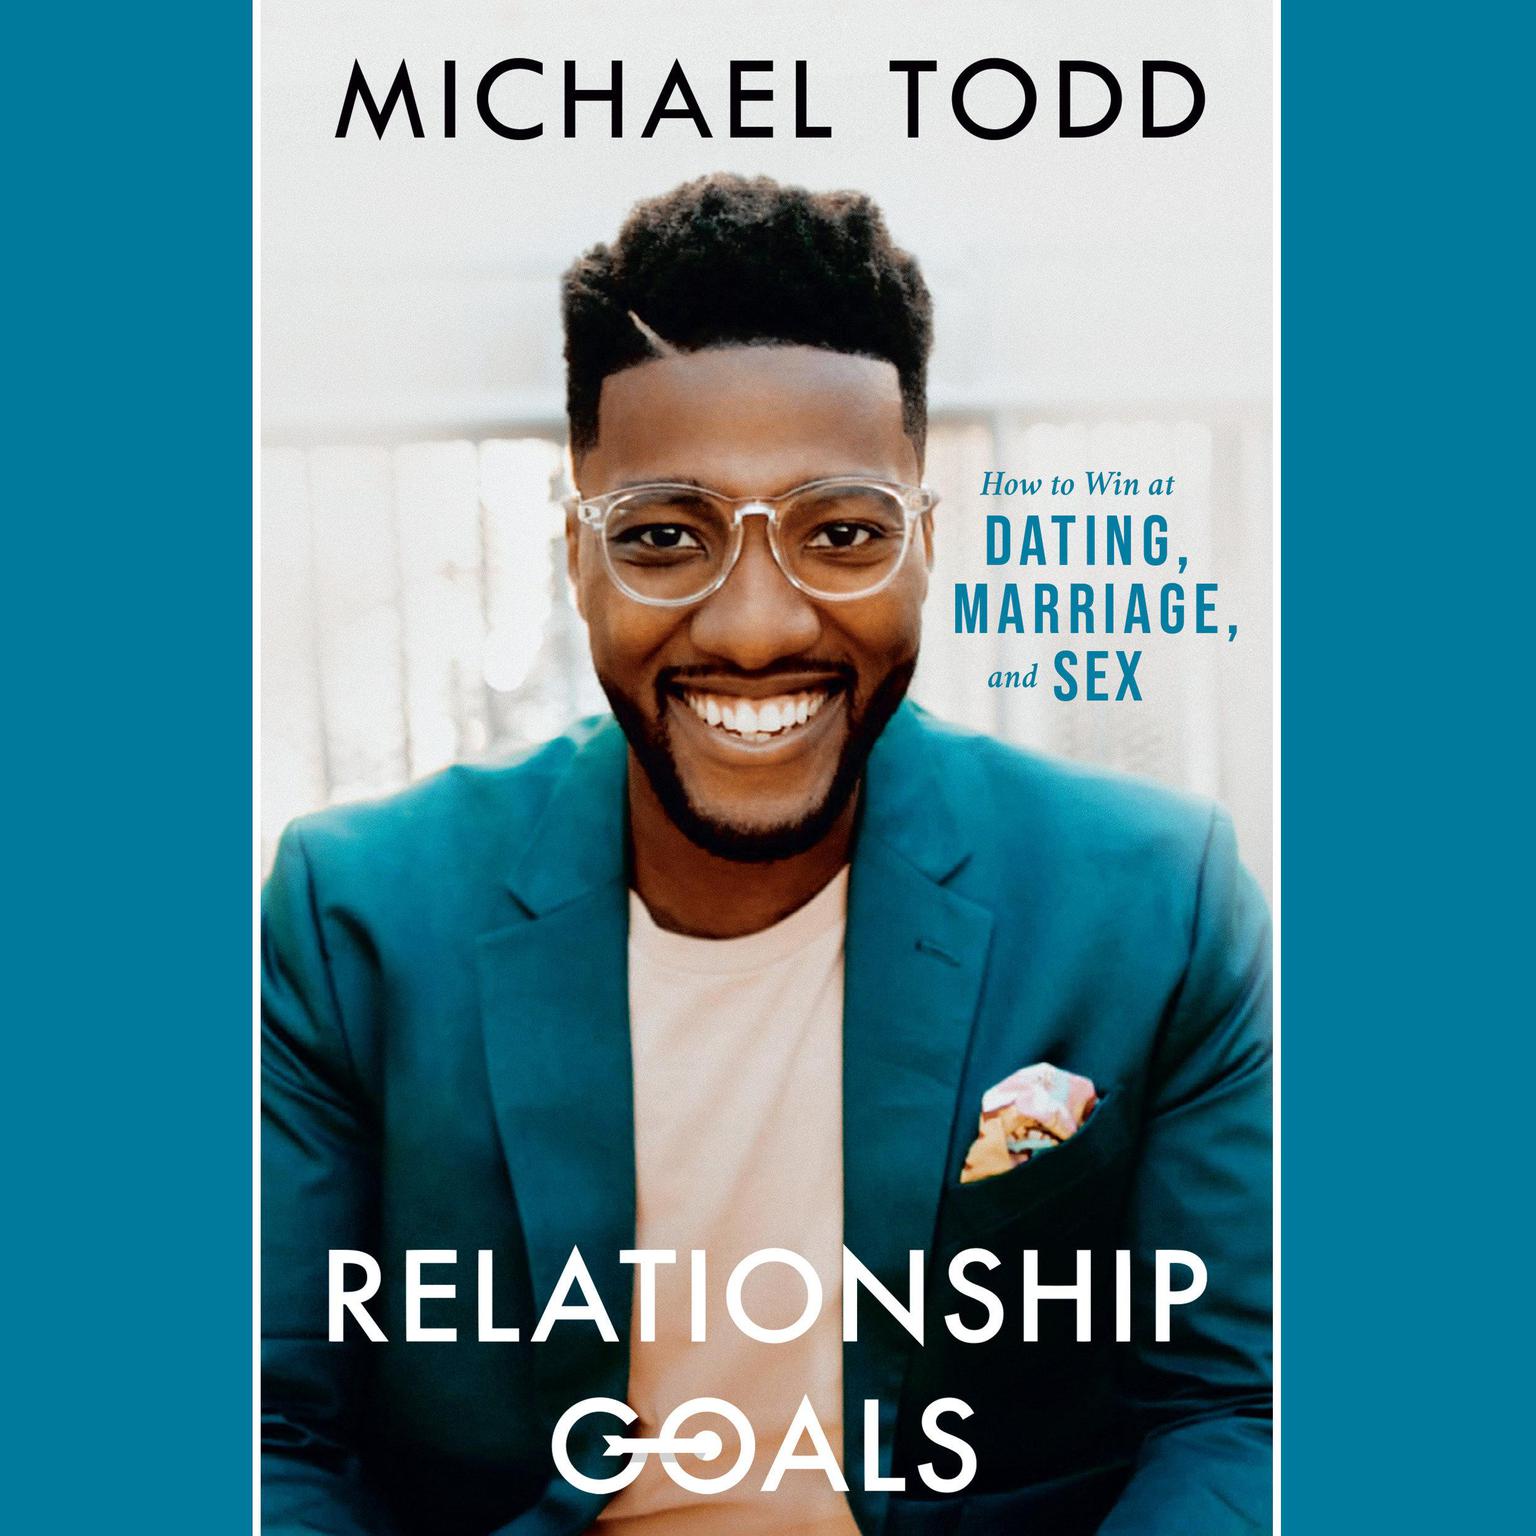 Relationship Goals Audiobook By Michael Todd — Listen Now